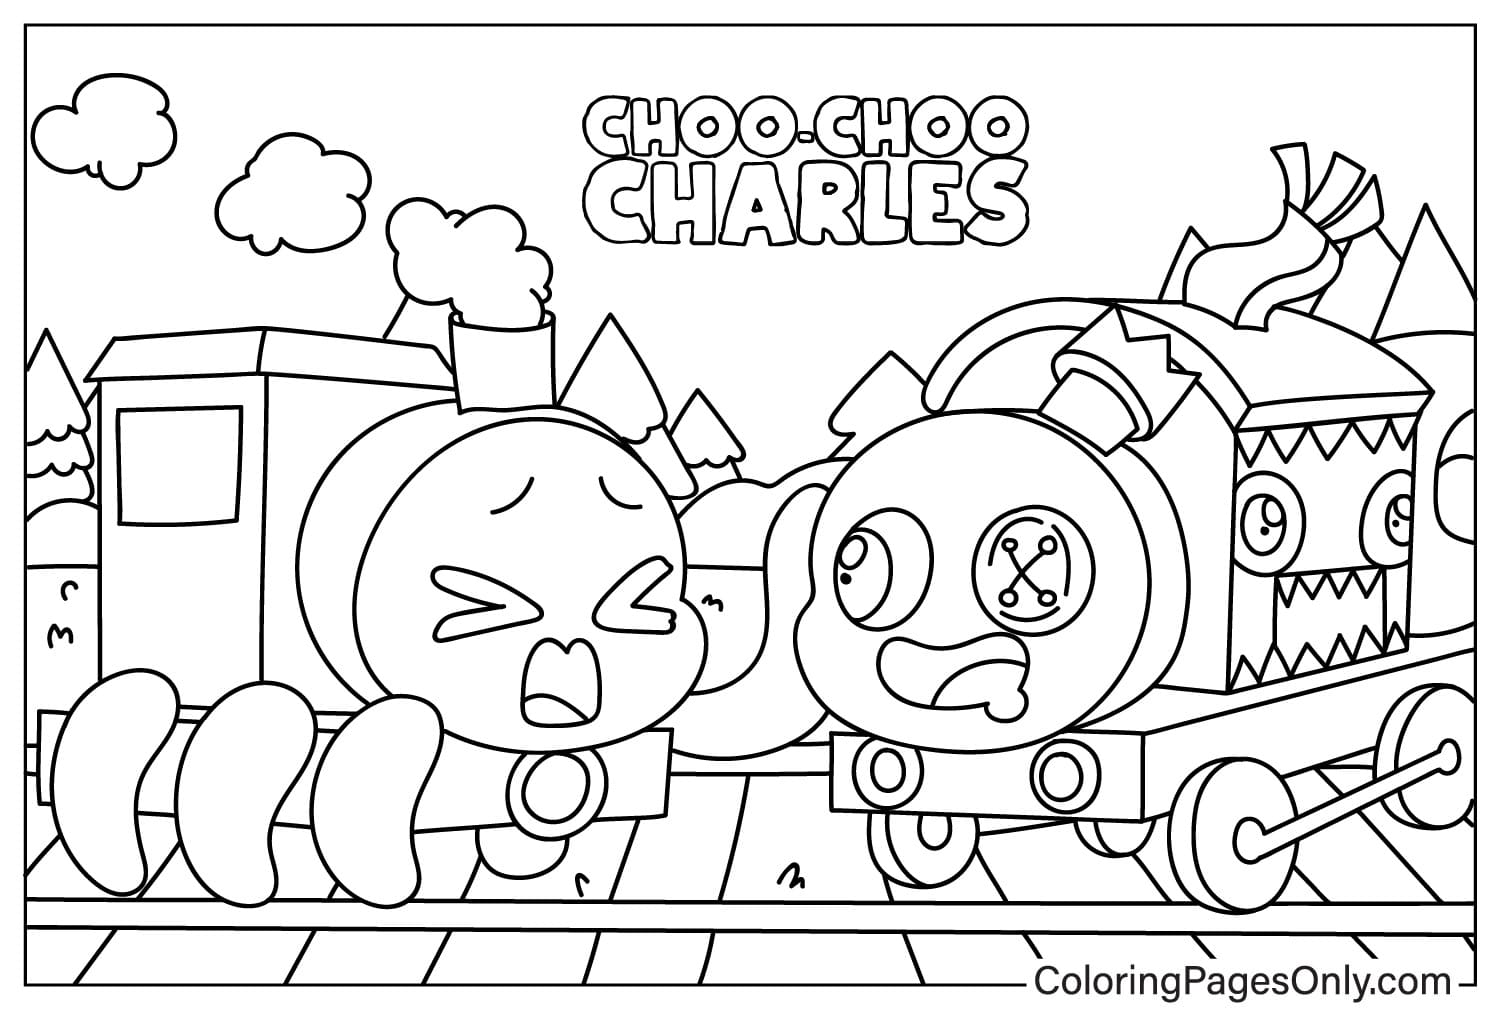 Thomas und Baby süßer Choo-Choo Charles von Choo-Choo Charles